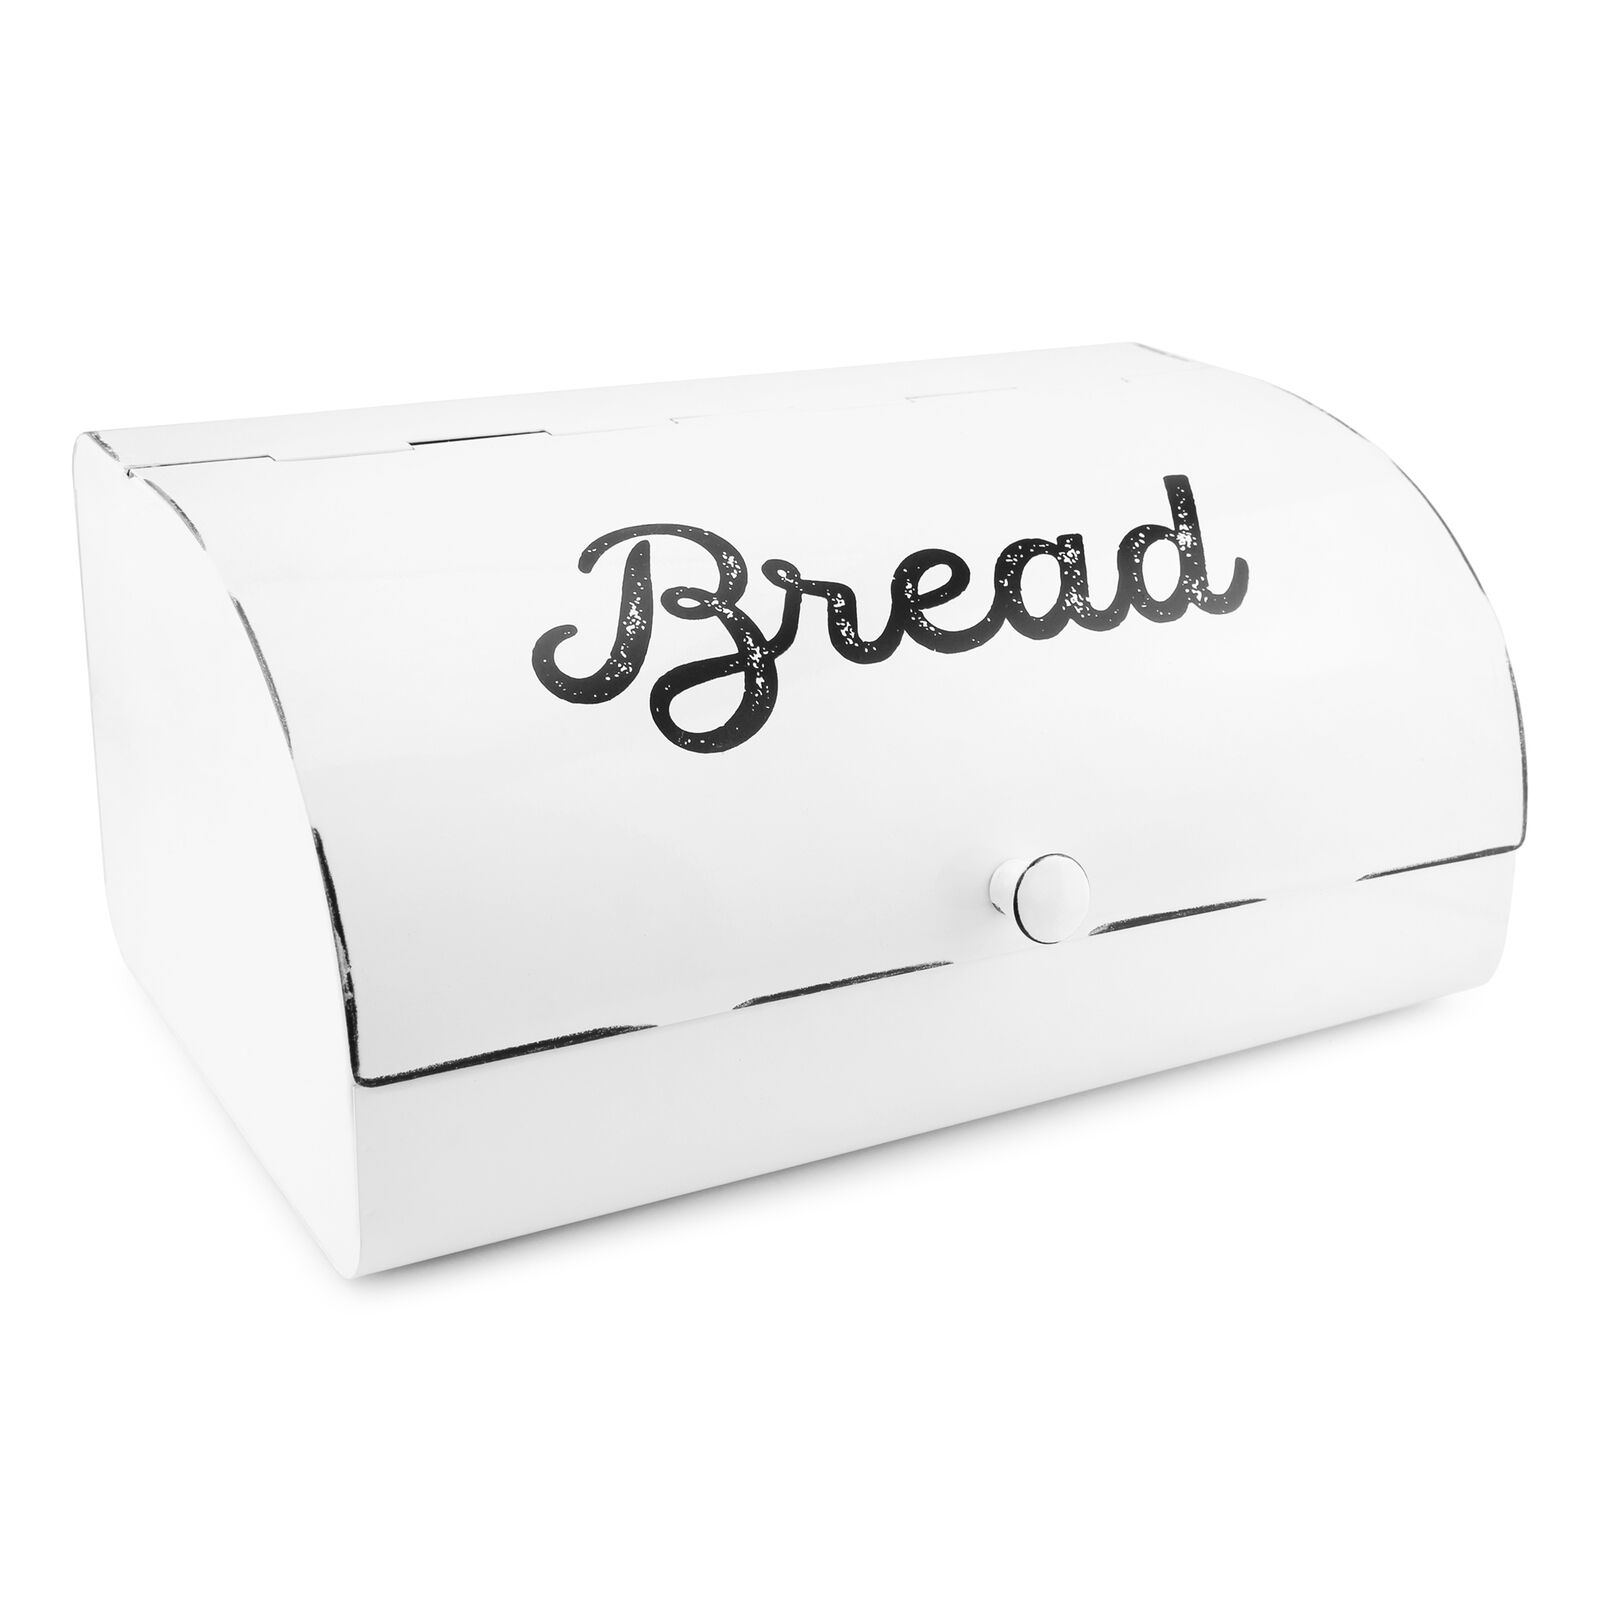 Rustic White Bread Box; Farmhouse Vintage Enamelware Countertop Bread Bin